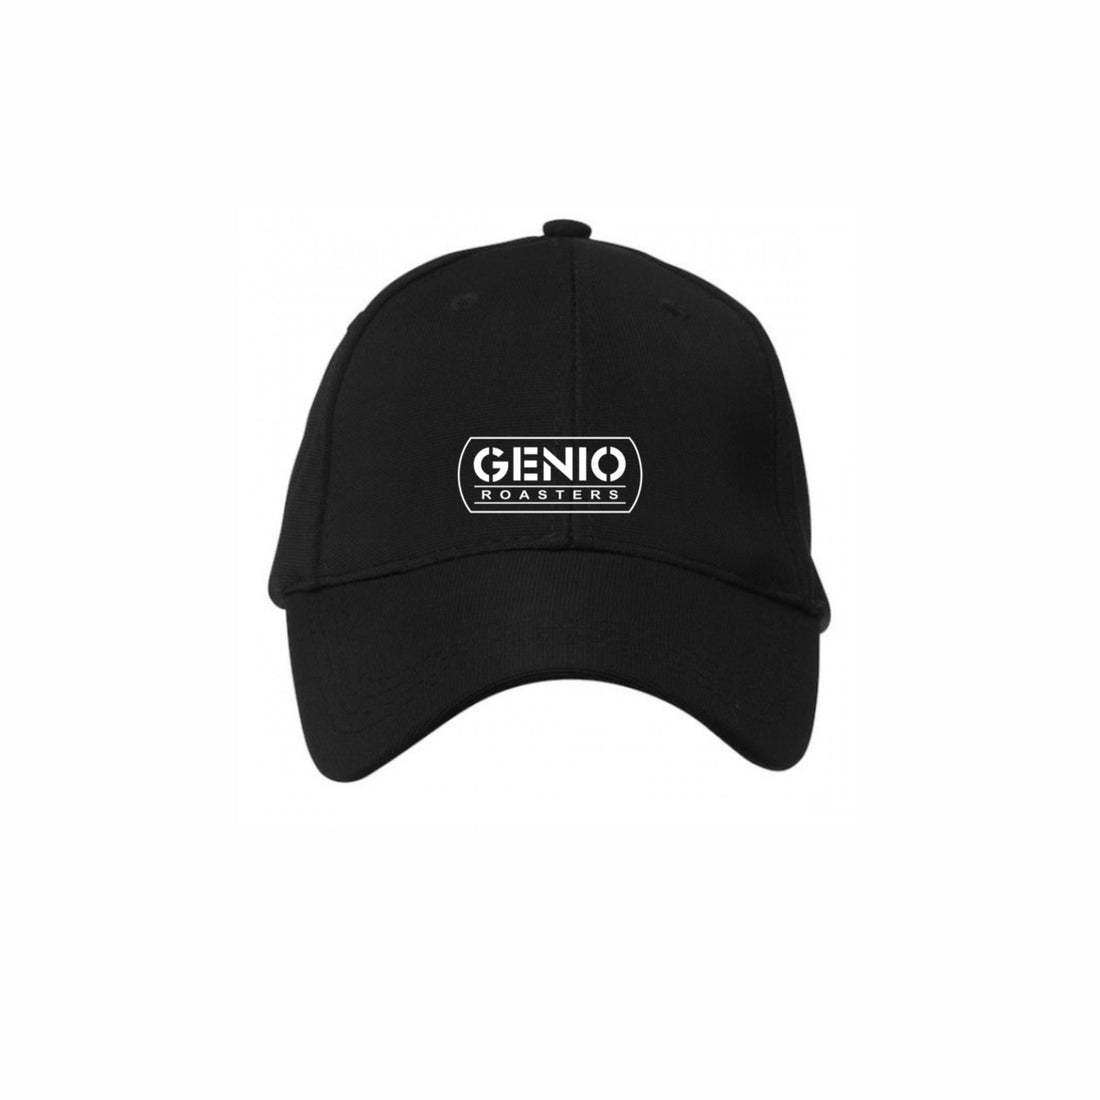 Genio Roasters Merchandise Cap 